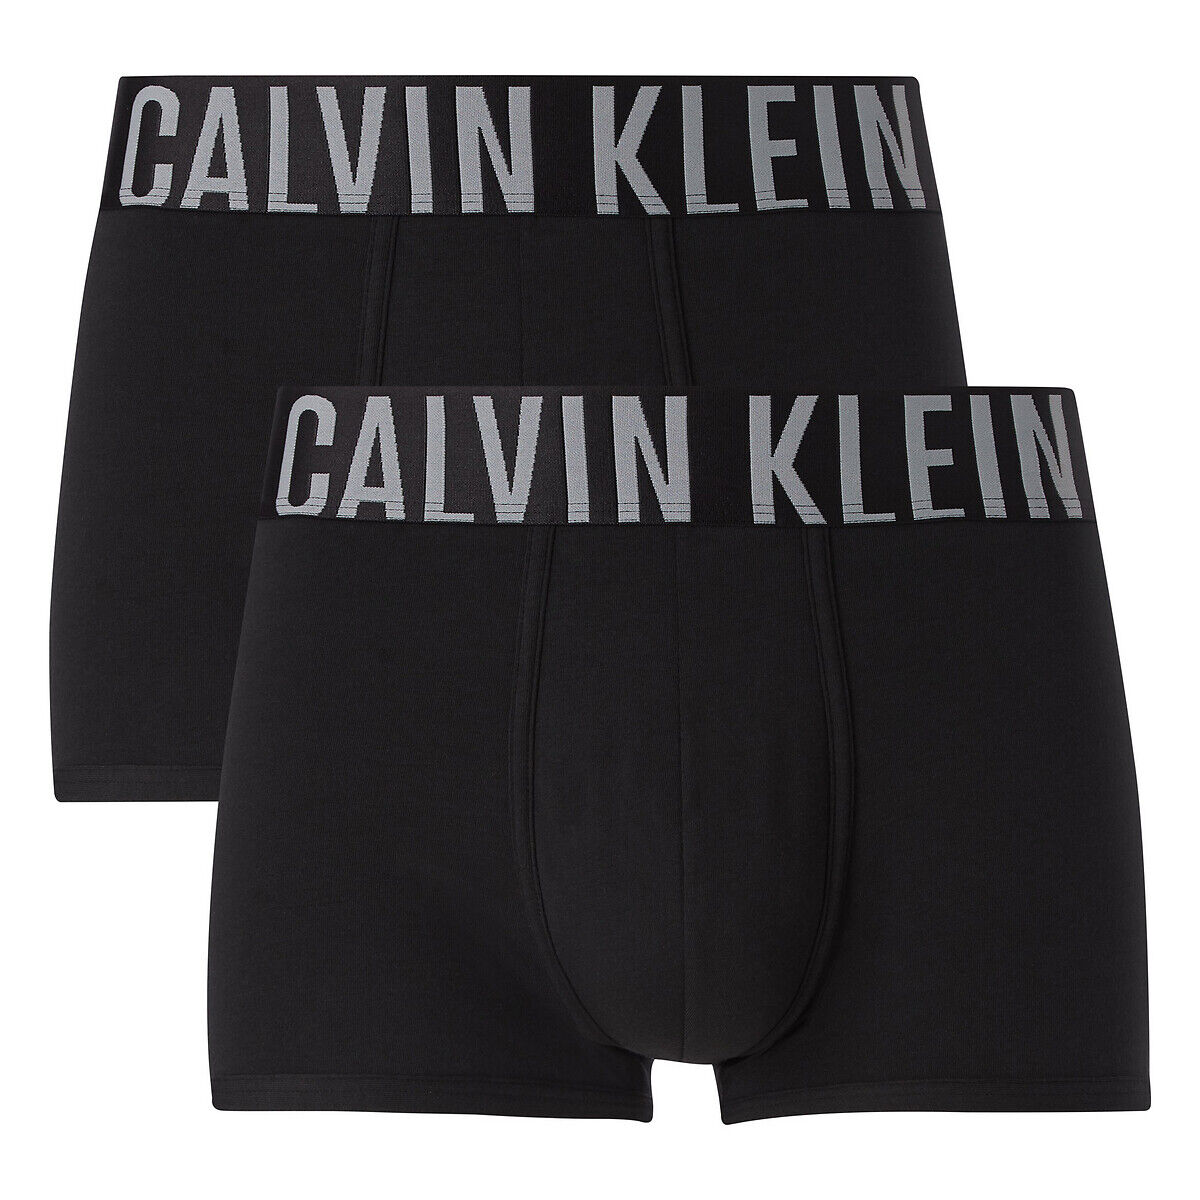 CALVIN KLEIN UNDERWEAR Lot de 2 boxers